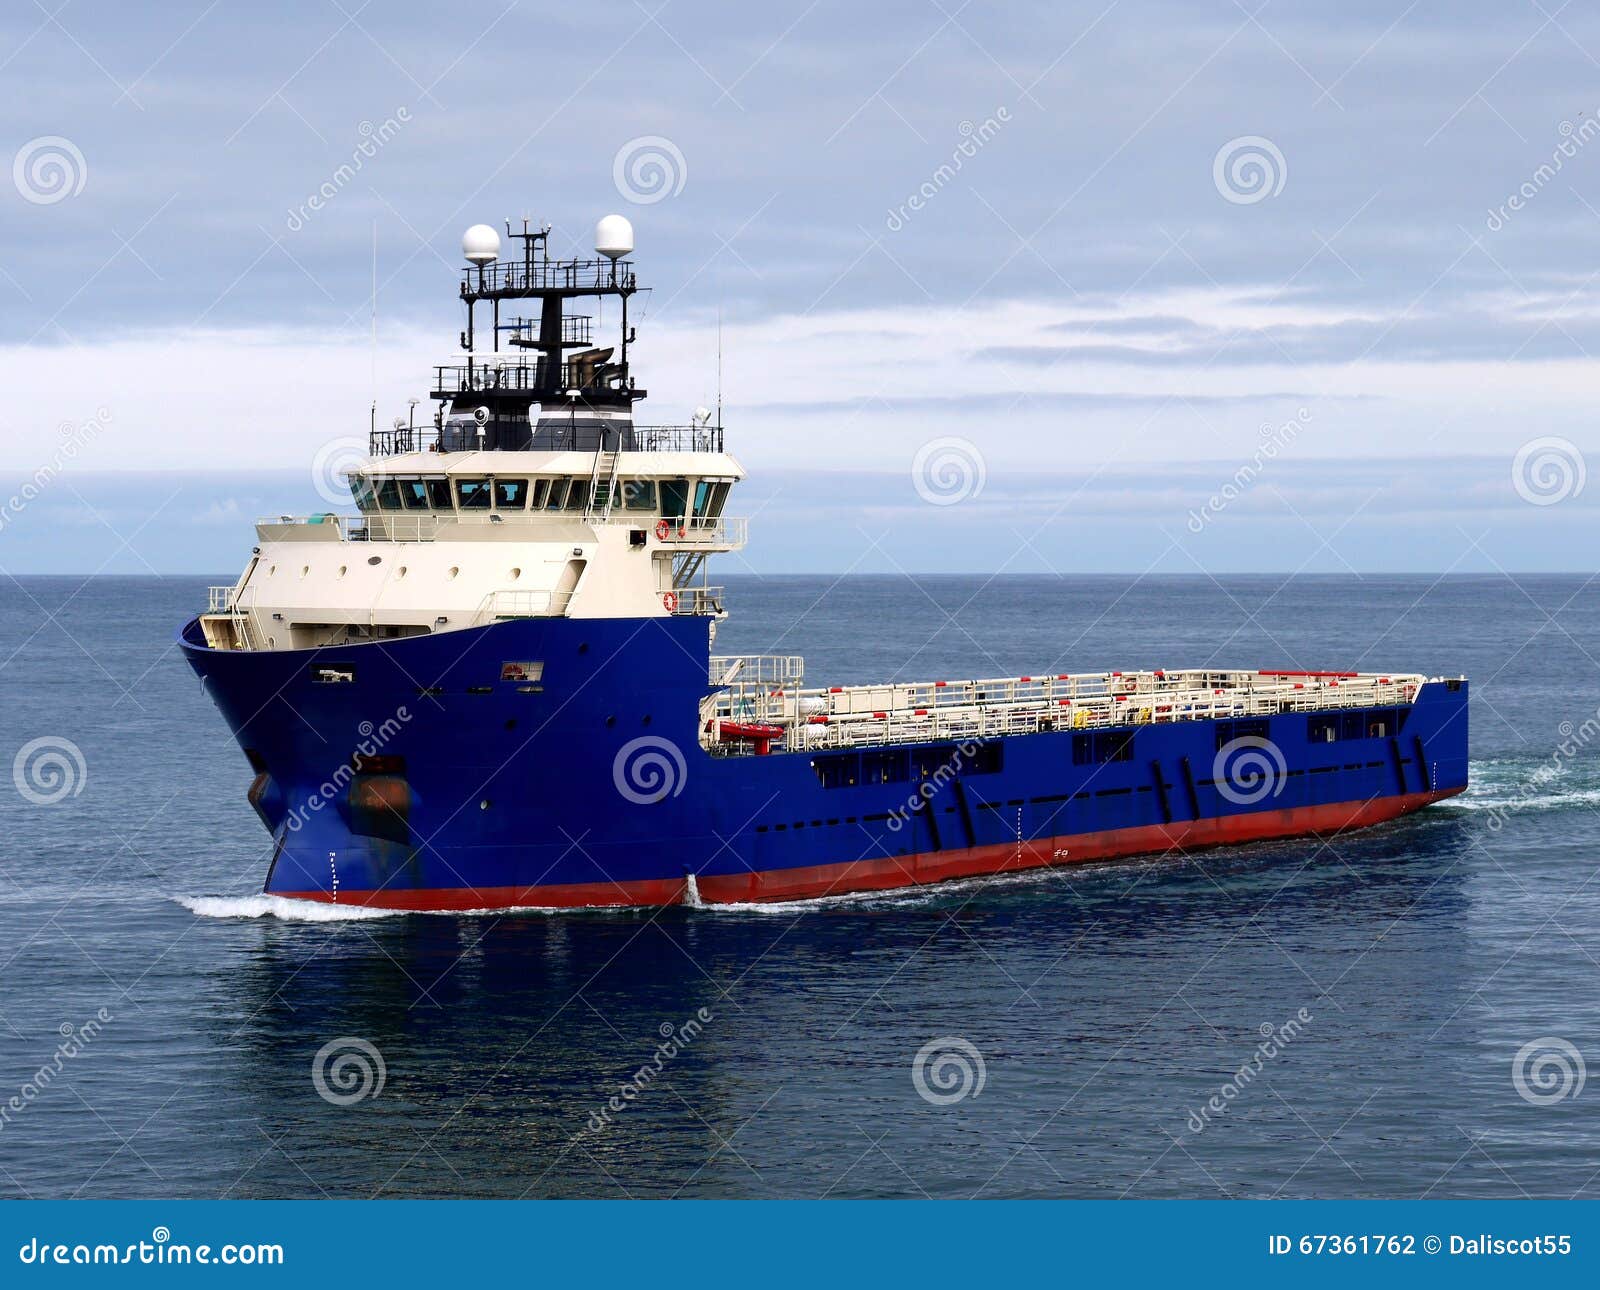 offshore vessel clipart - photo #38